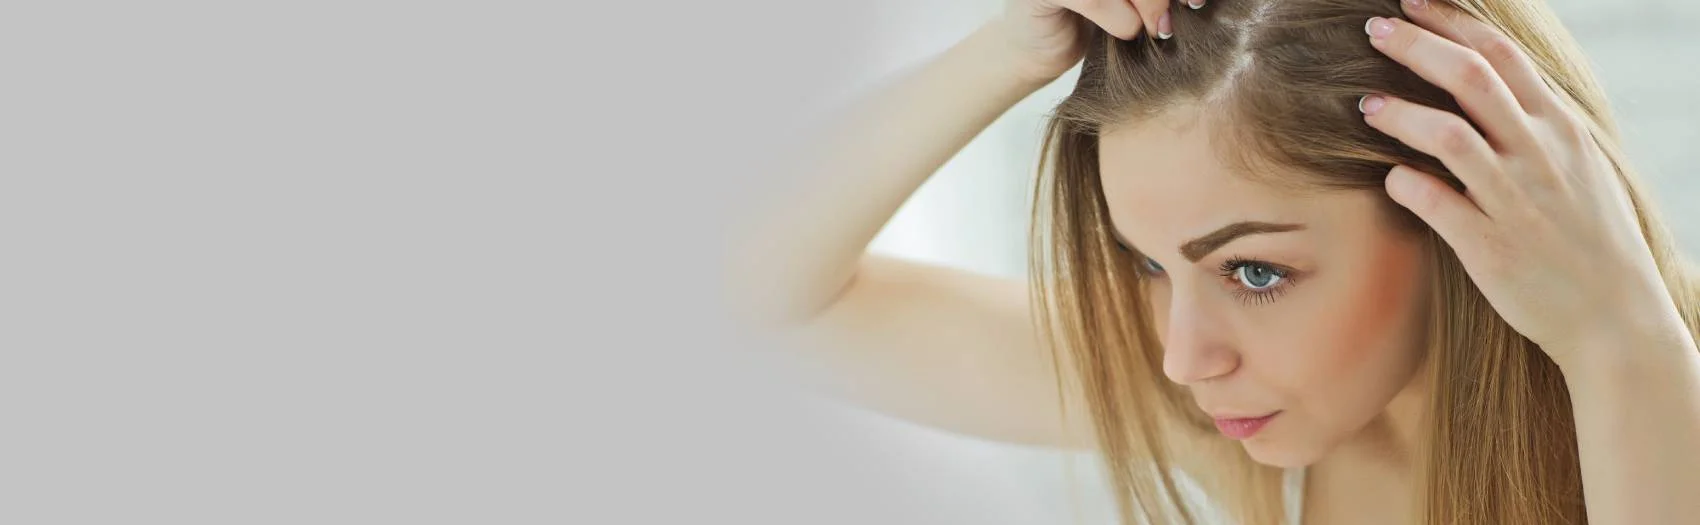 Dermaroller for Hair loss treatment